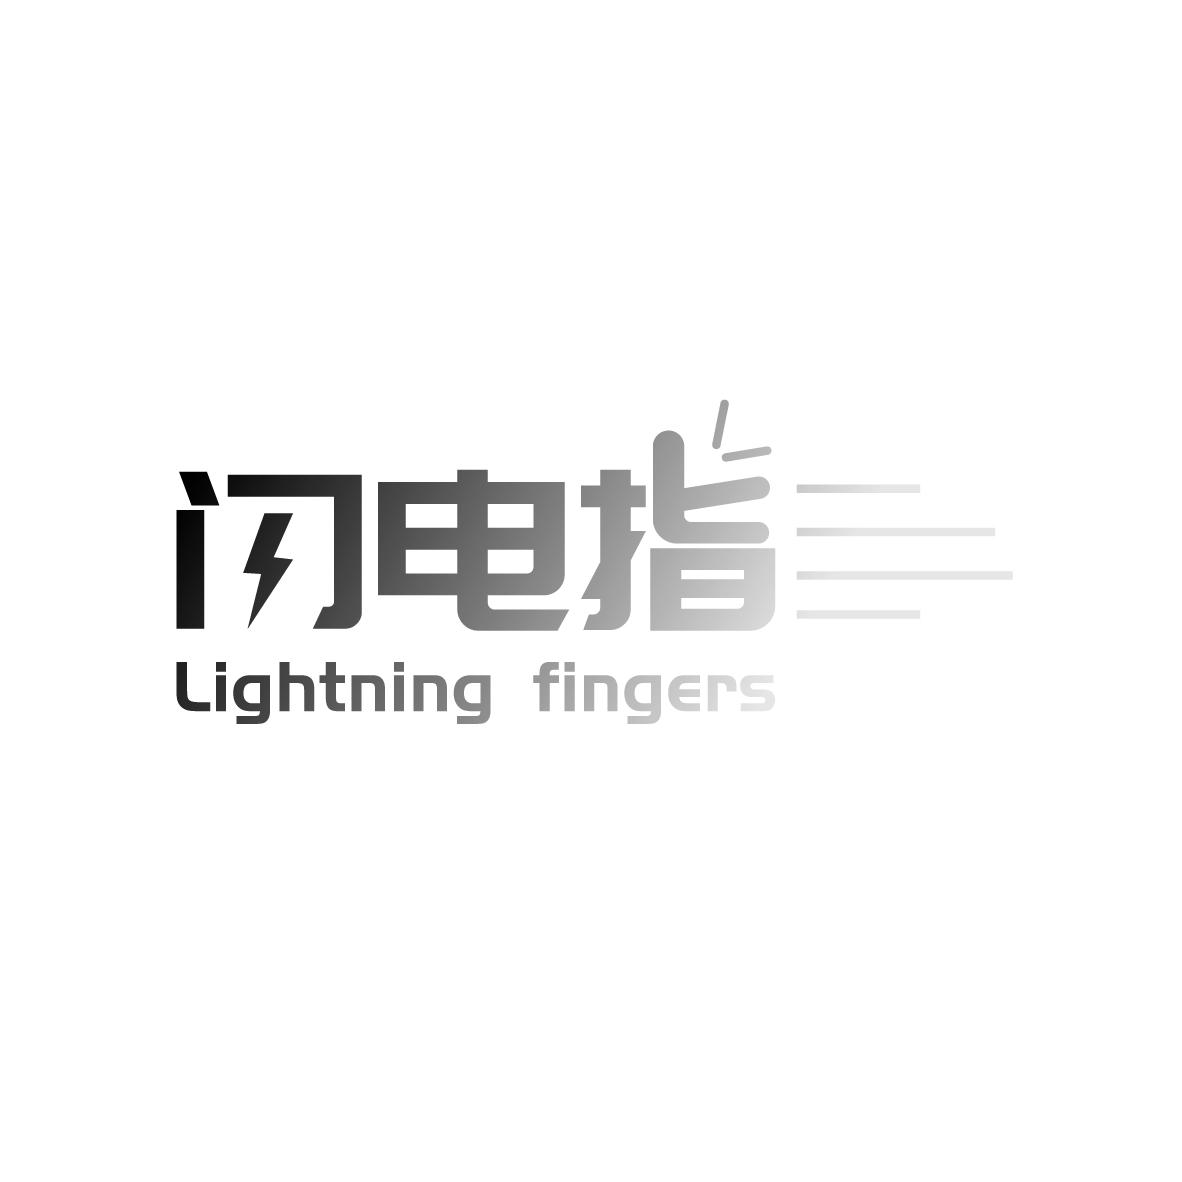 11类-电器灯具闪电指 LIGHTNING FINGERS商标转让